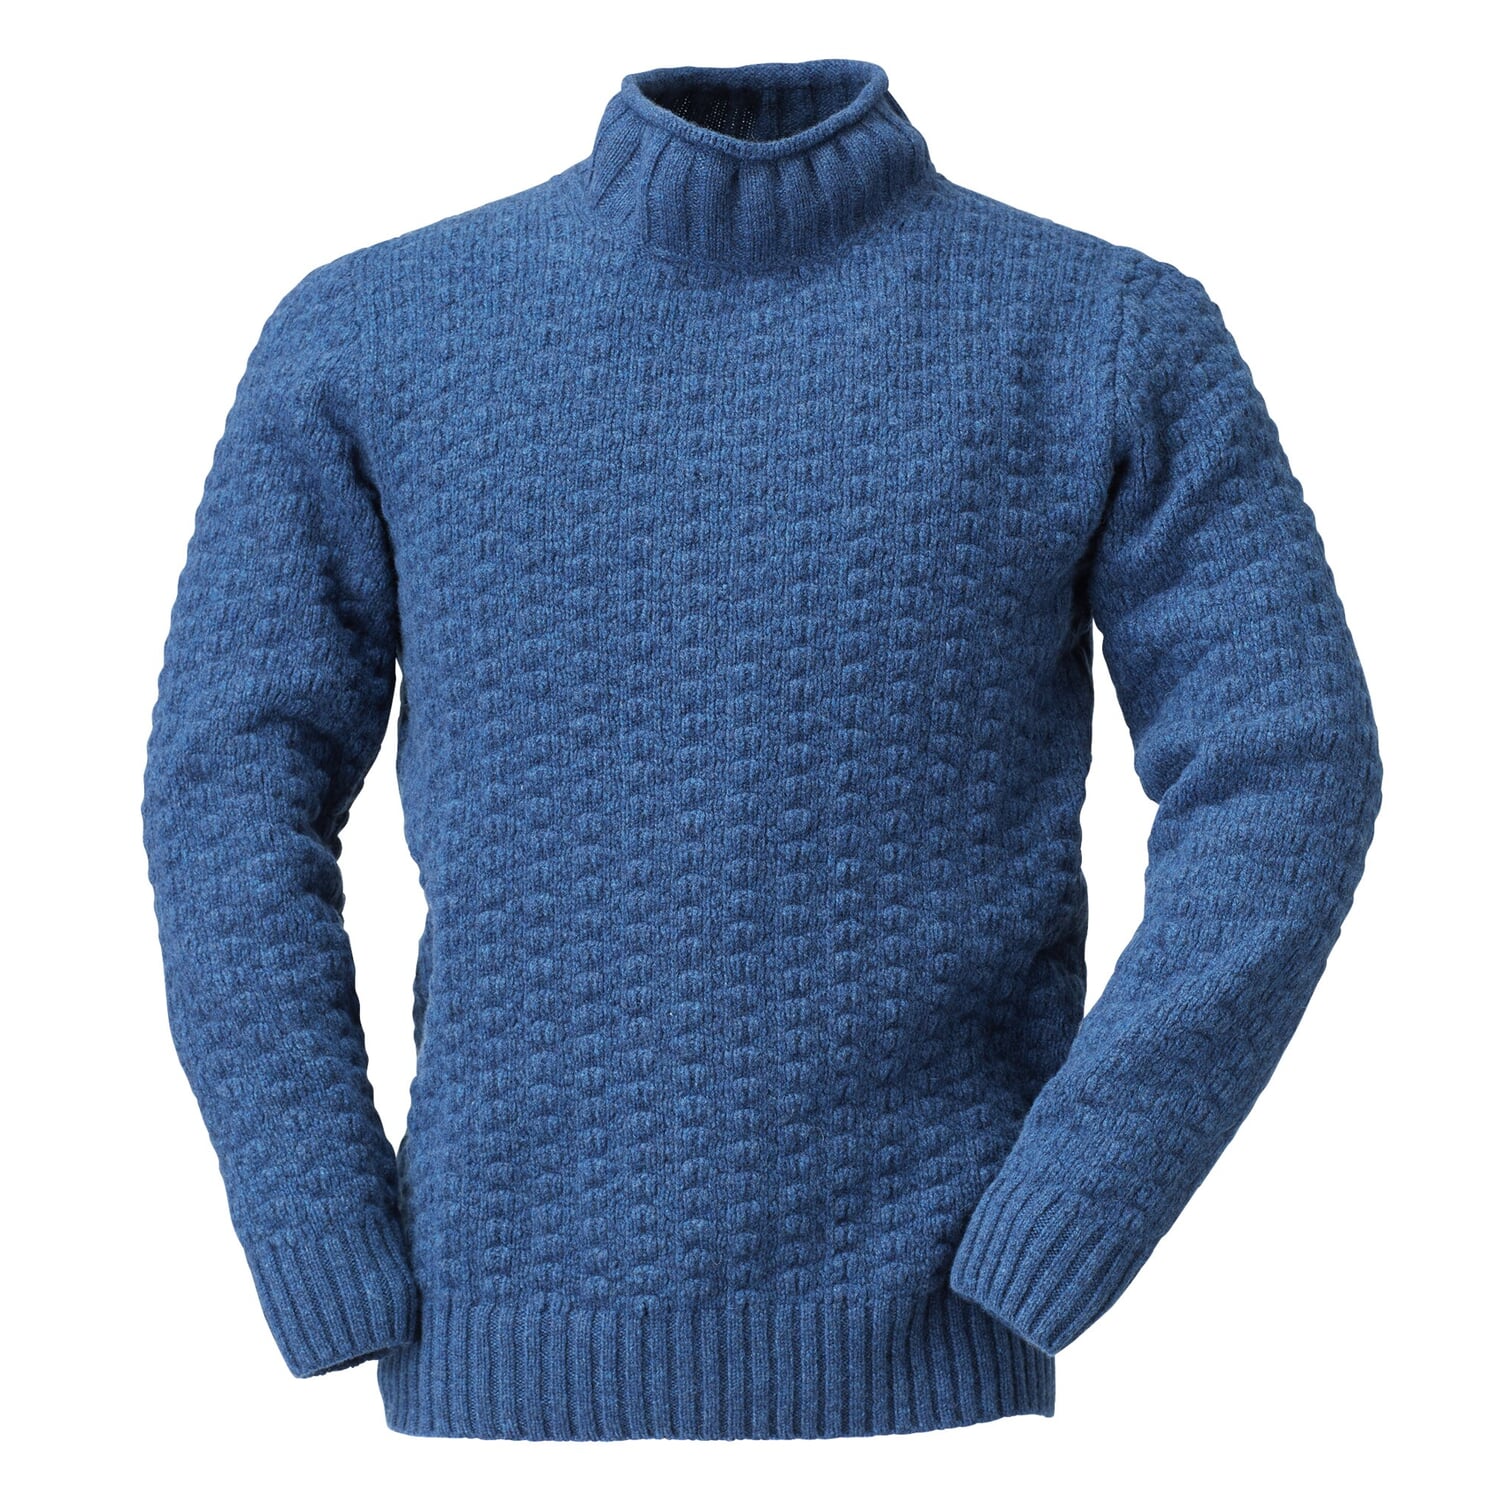 https://assets.manufactum.de/p/034/034521/34521_01.jpg/mens-merino-sweater.jpg?profile=pdsmain_1500